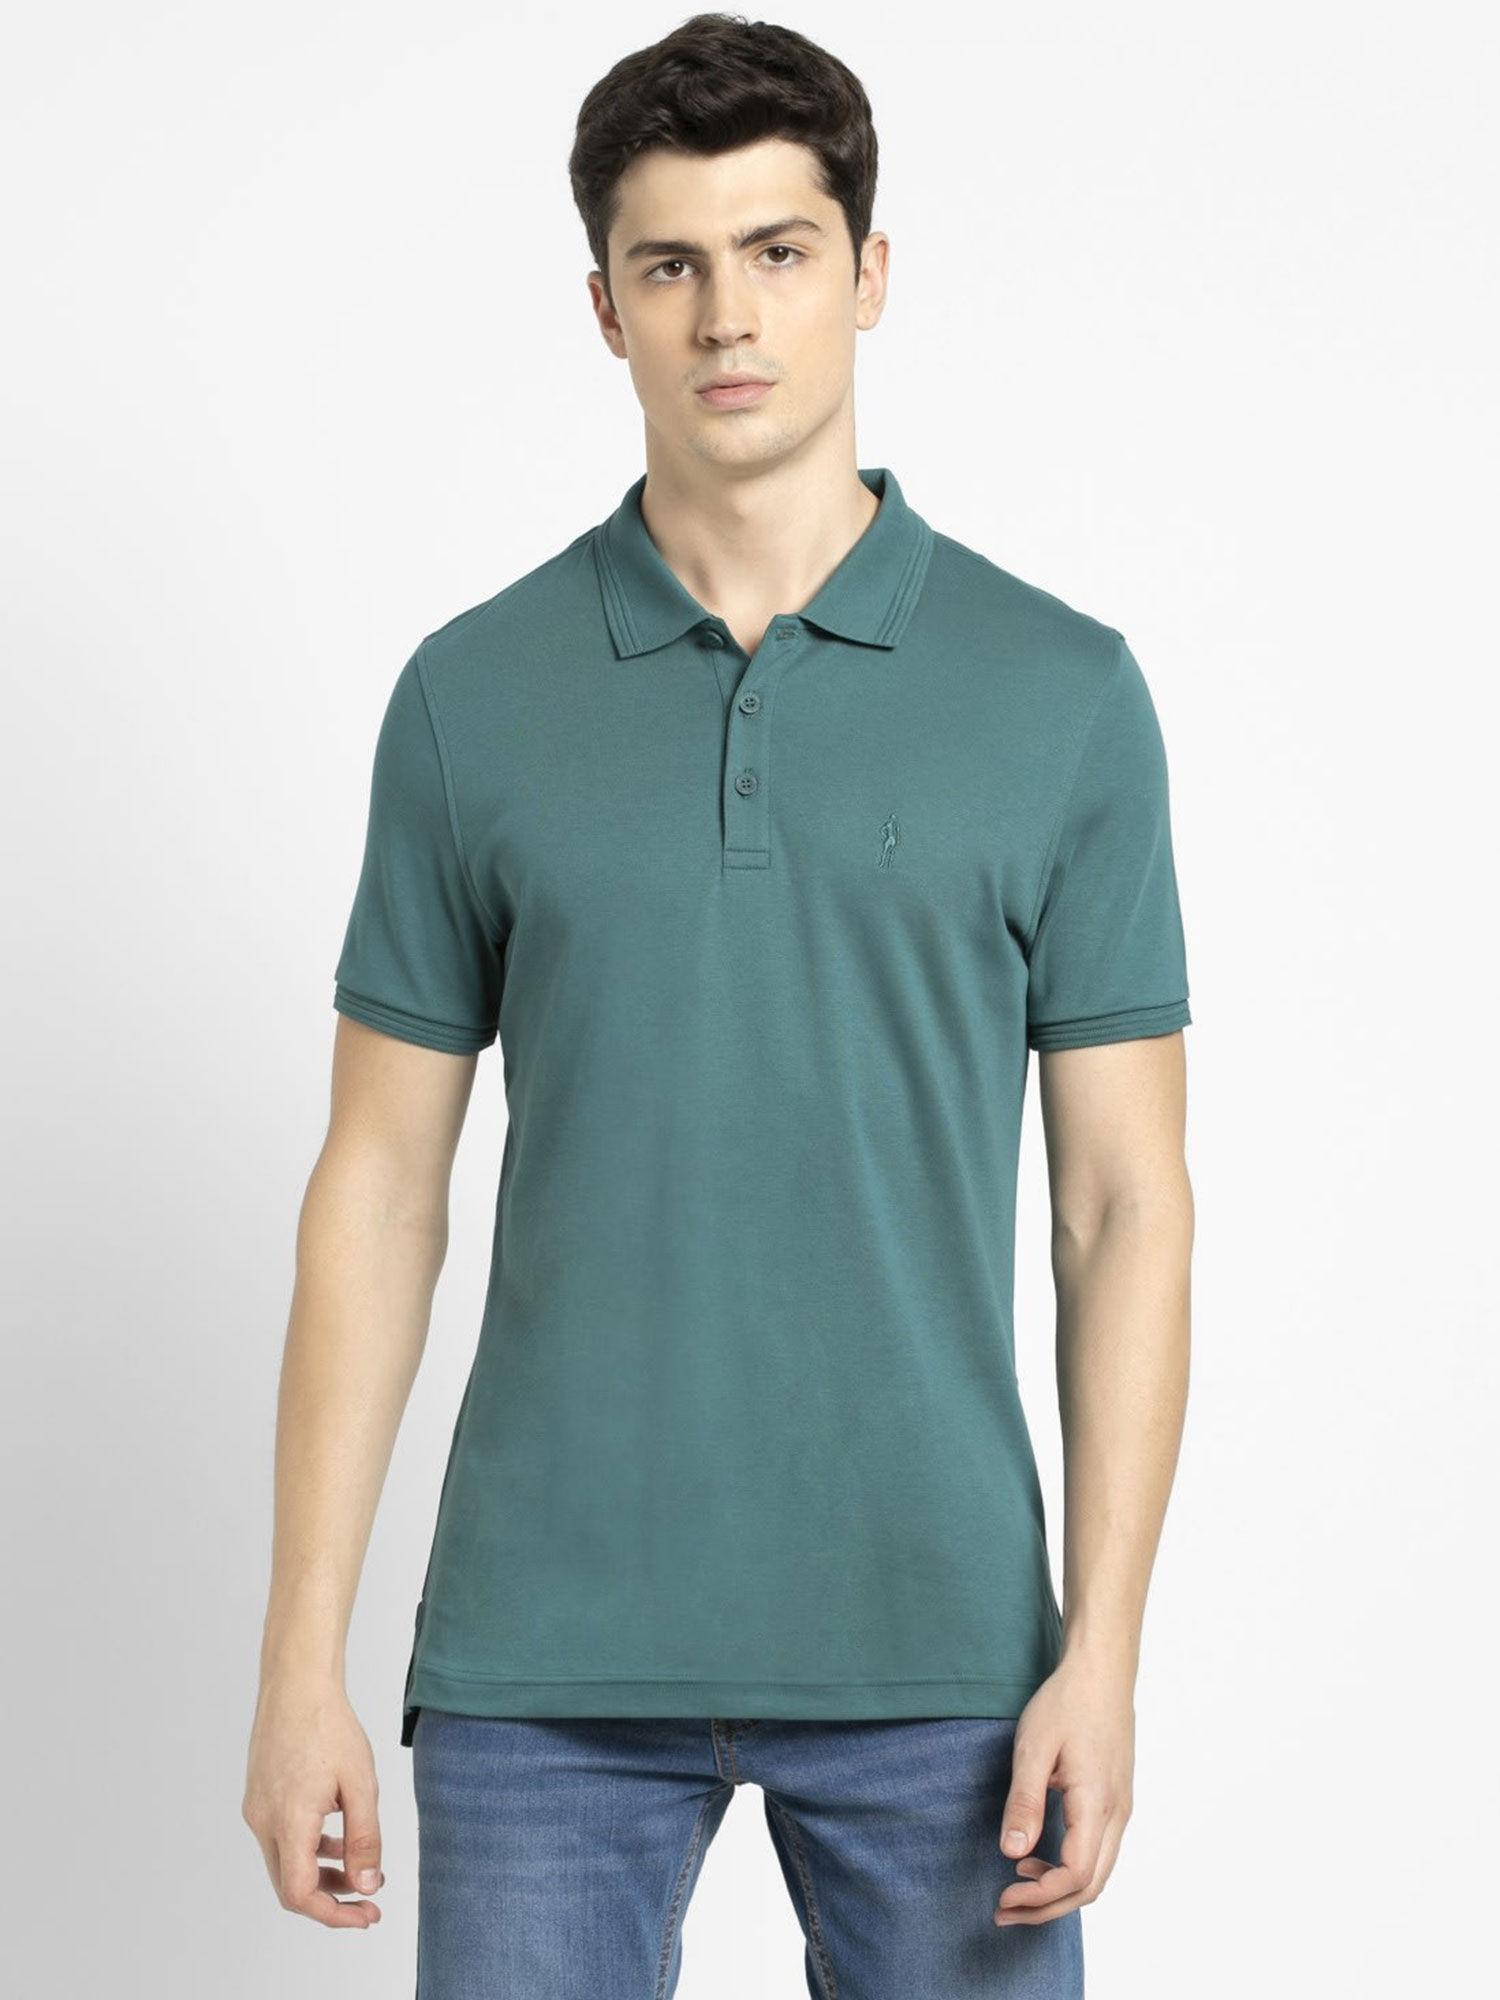 pacific-green-polo-t-shirt